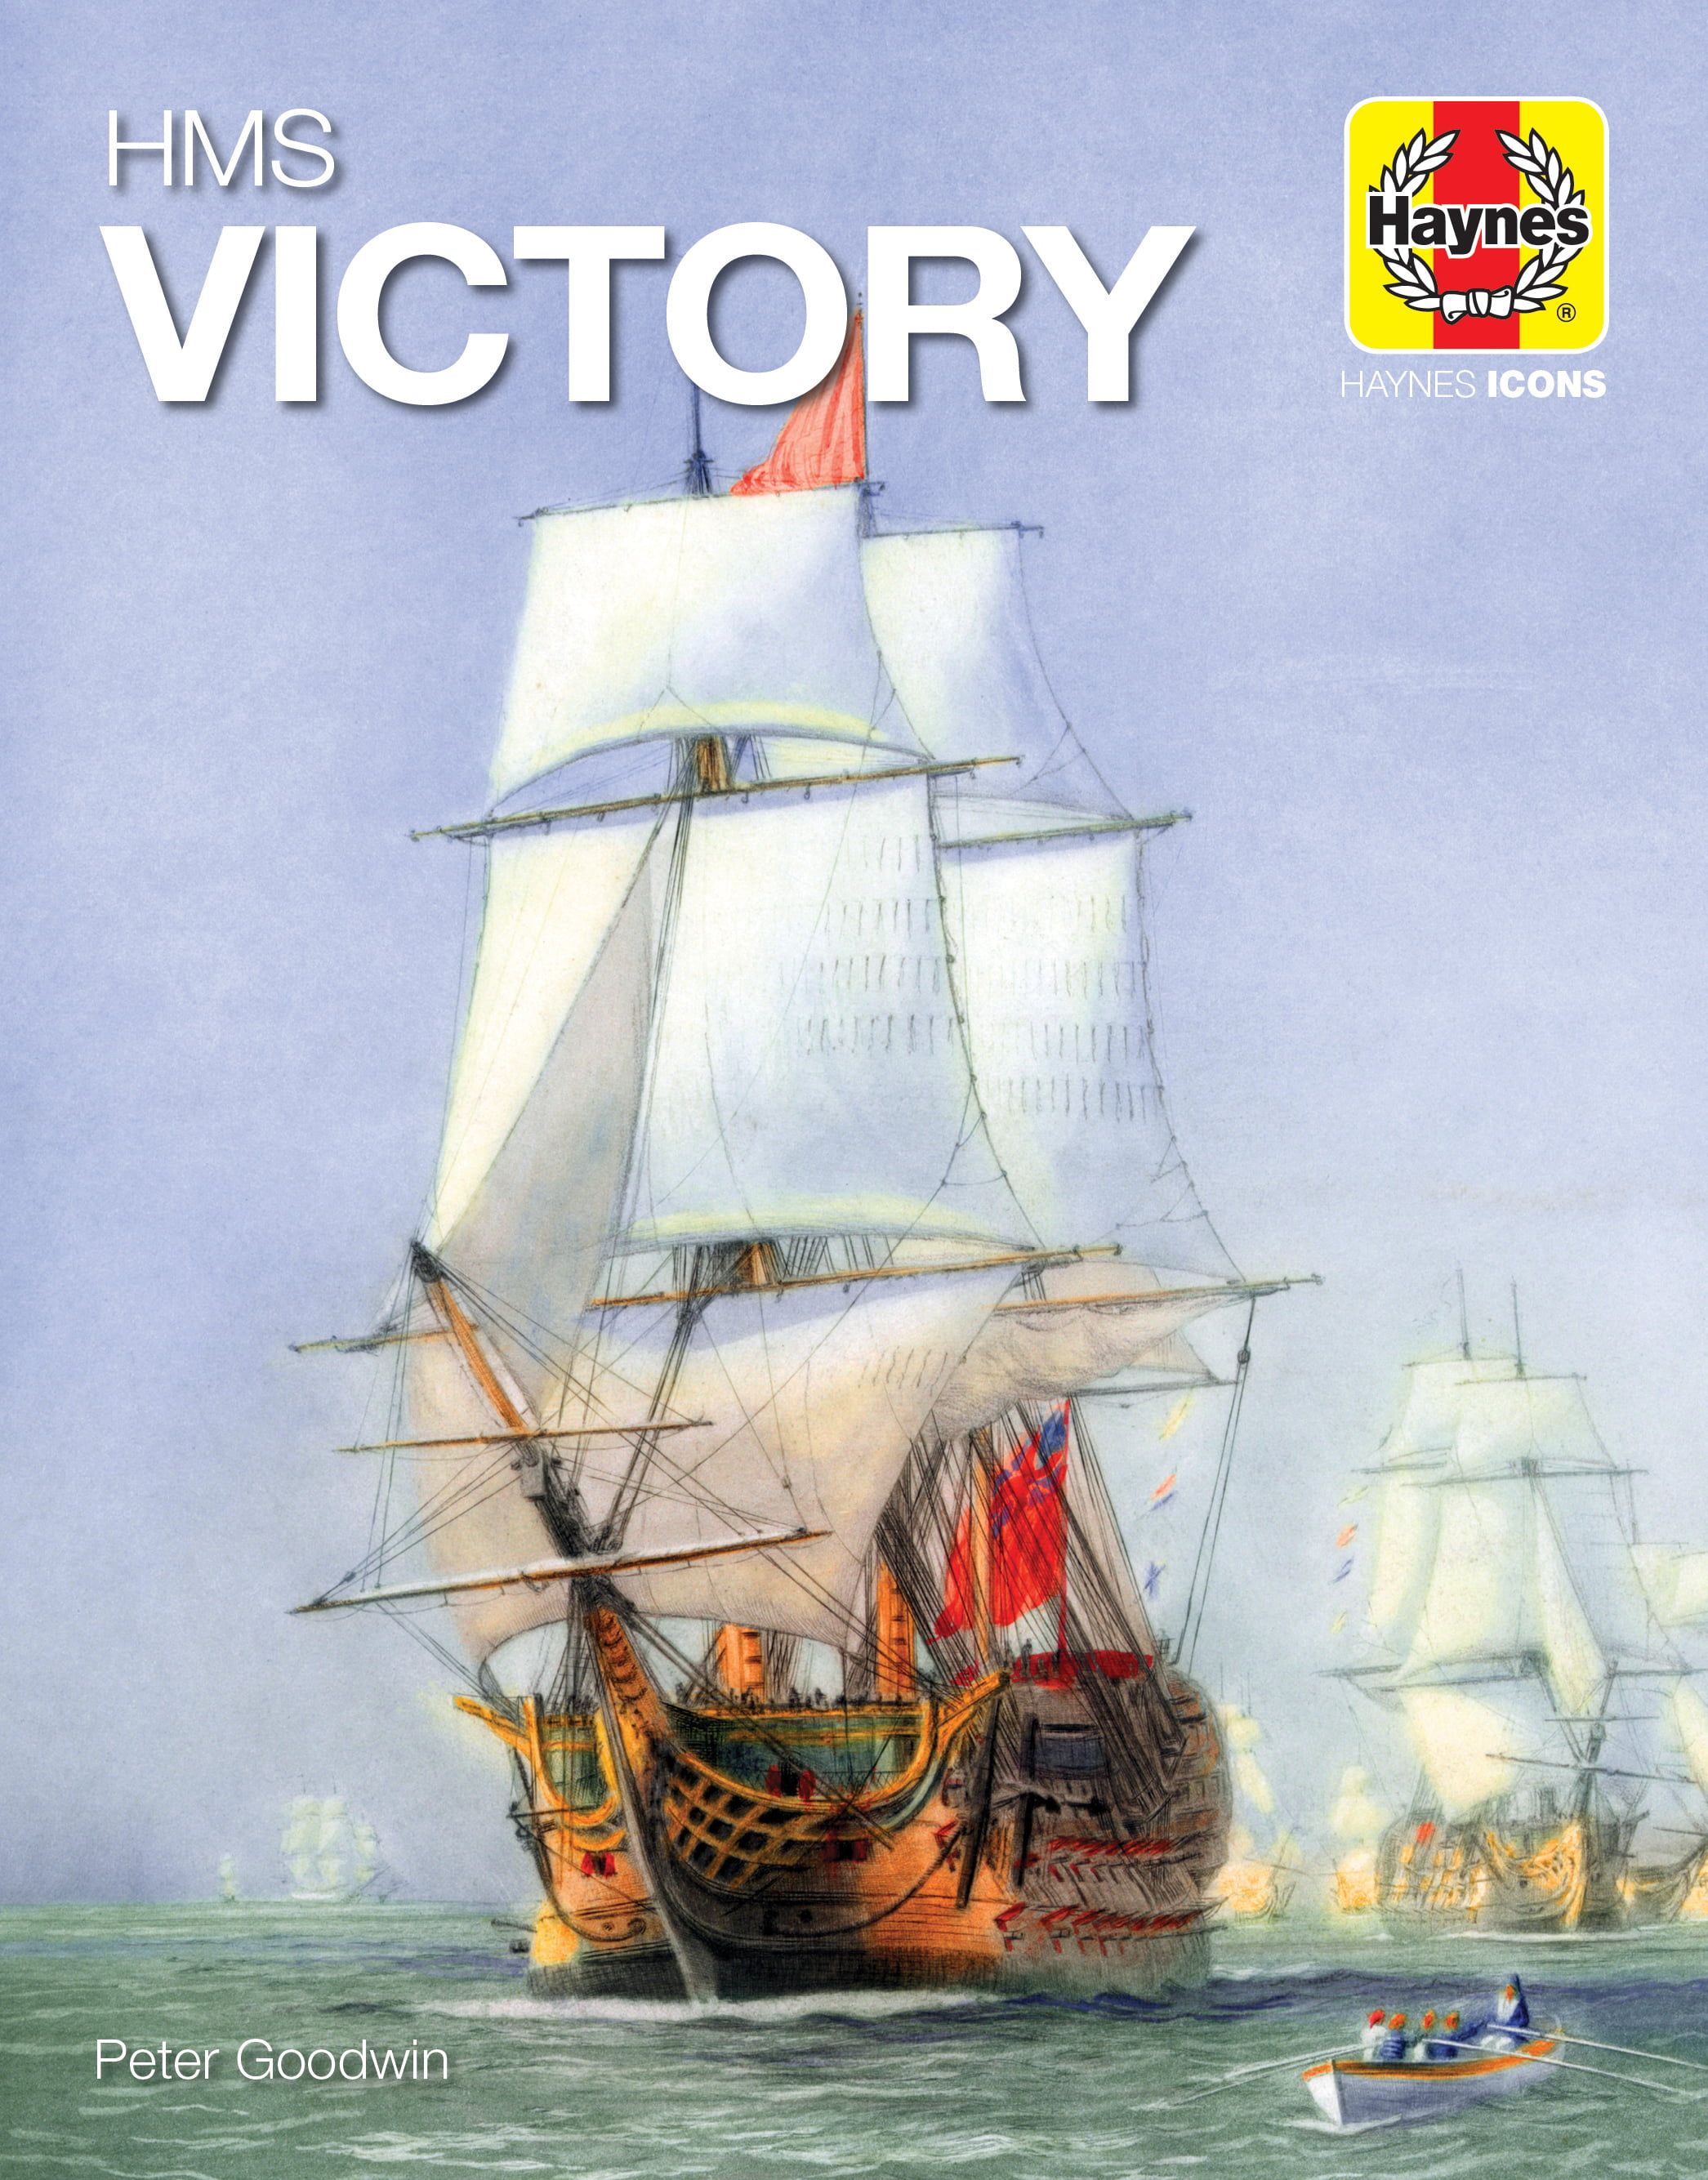 Haynes Icons HMS Victory Manual